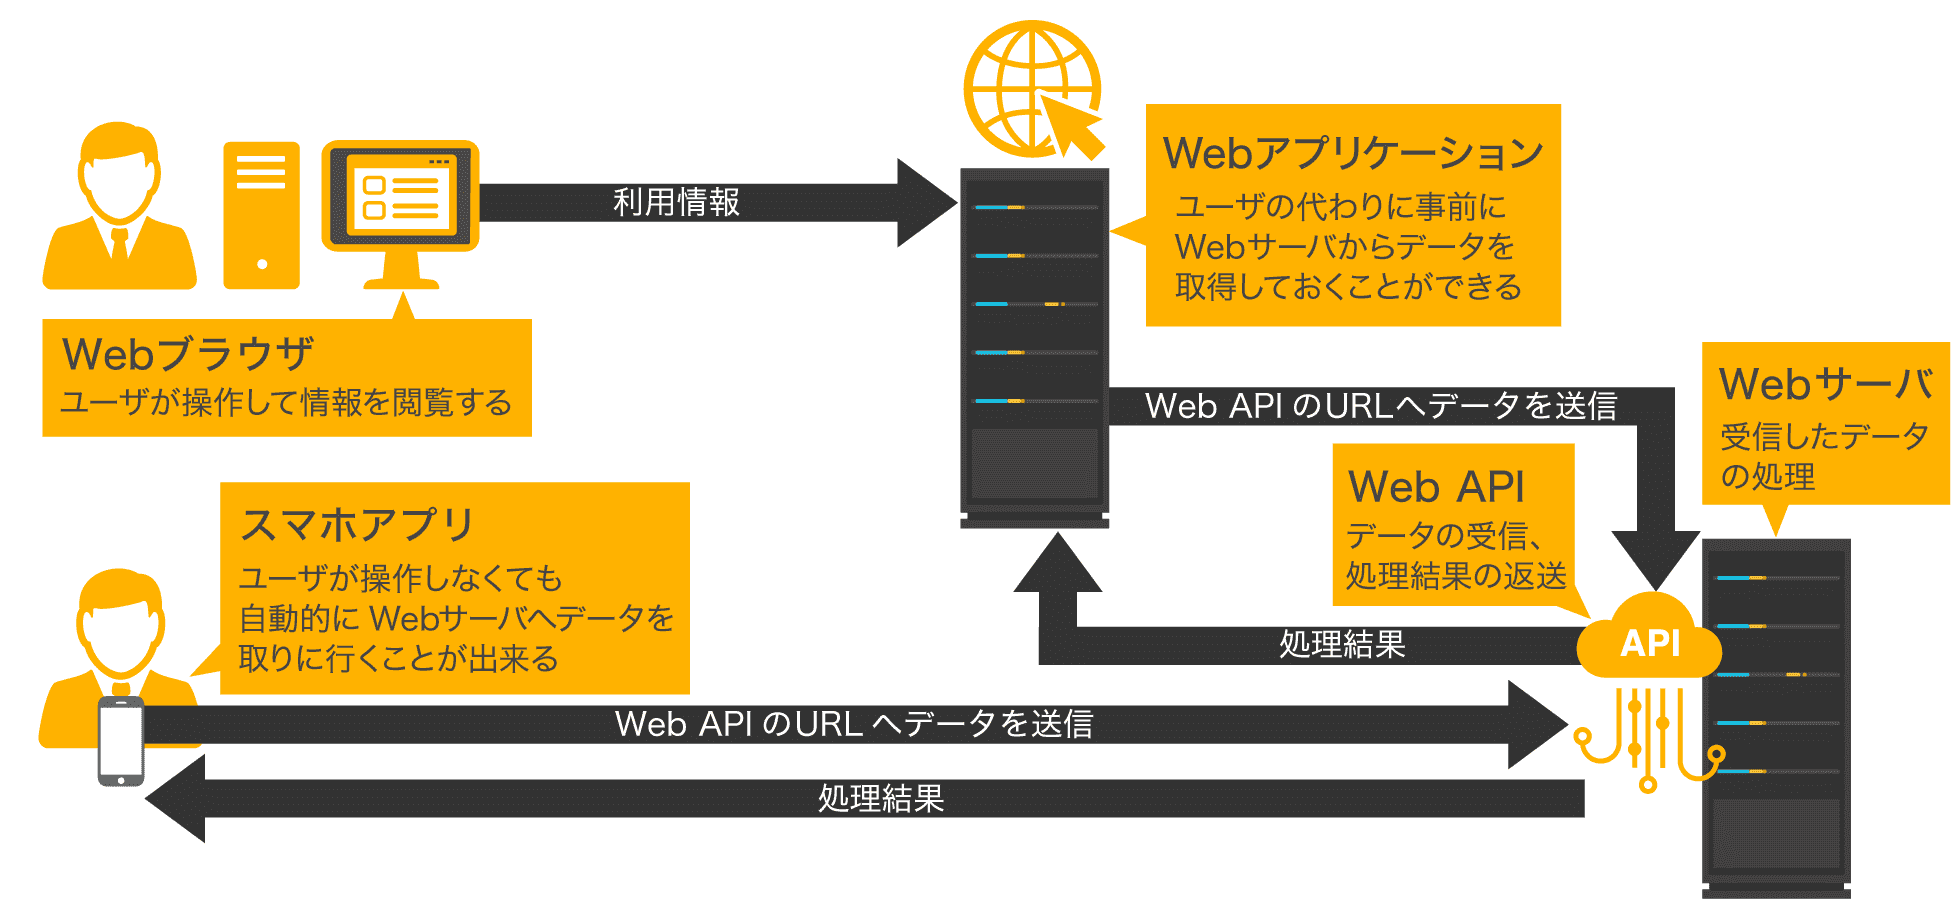 Web API通信の流れ